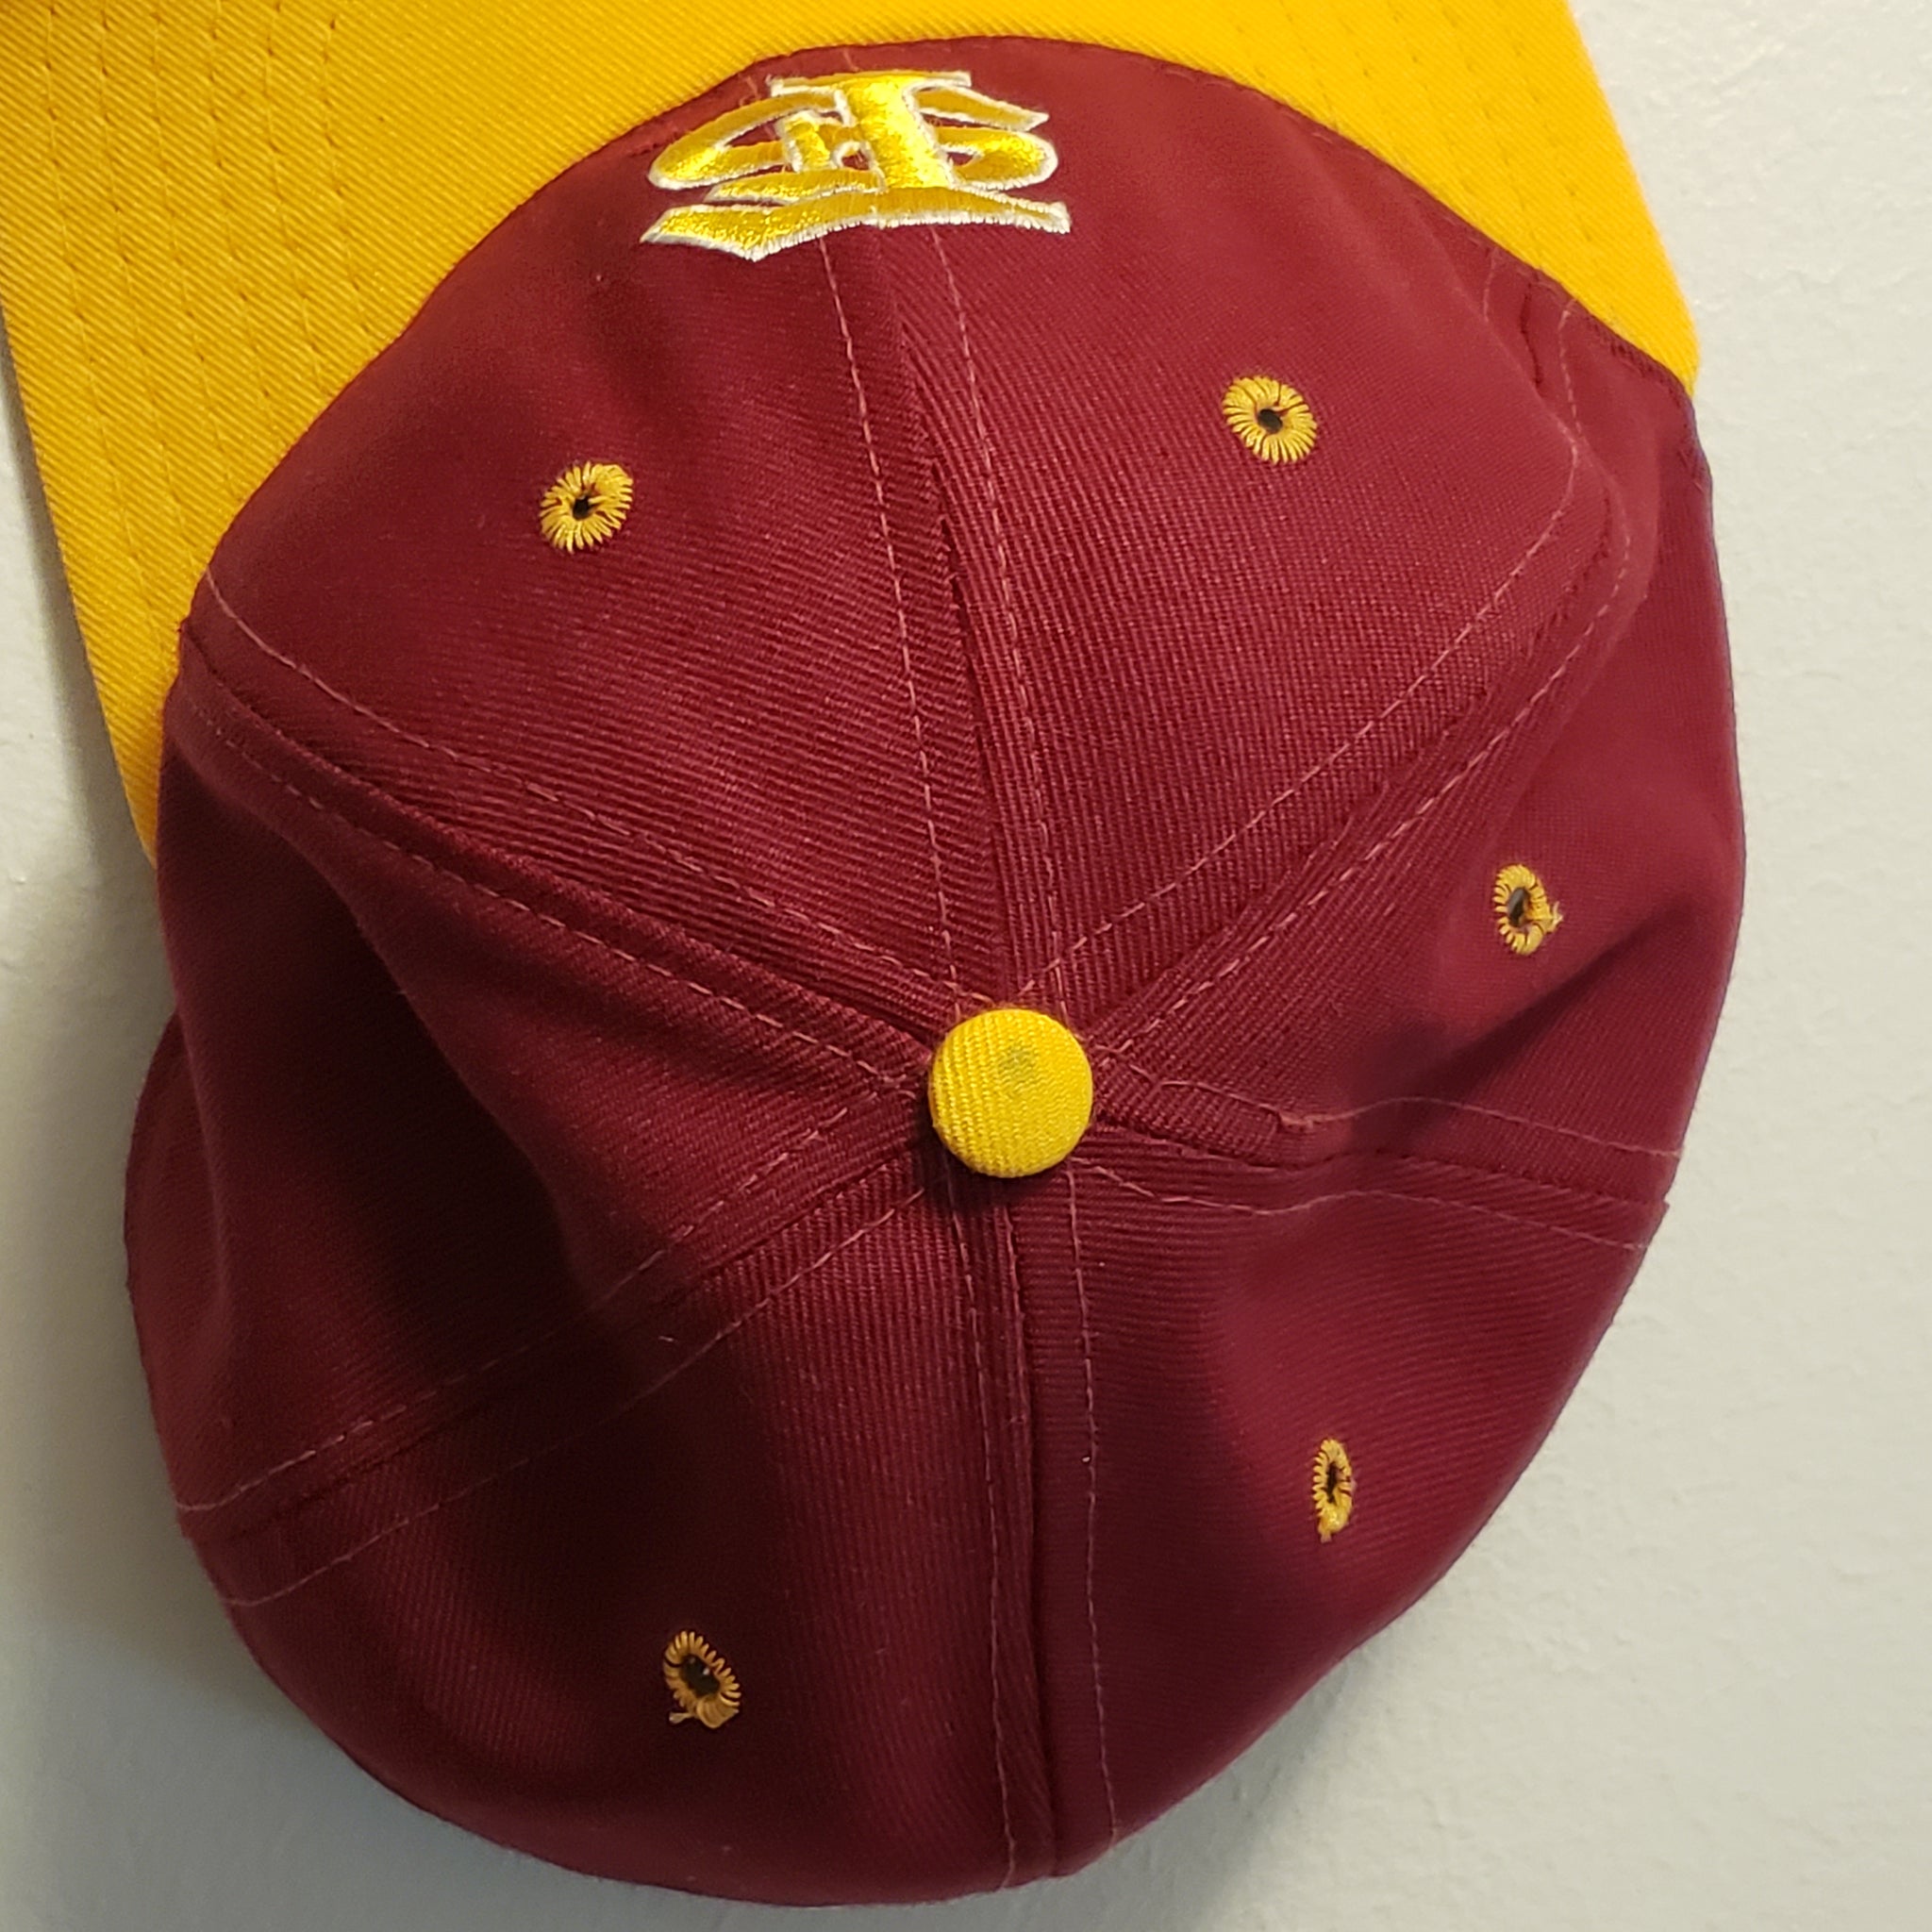 FSU Baseball Gear, Florida State Seminoles Baseball Jerseys, Hats